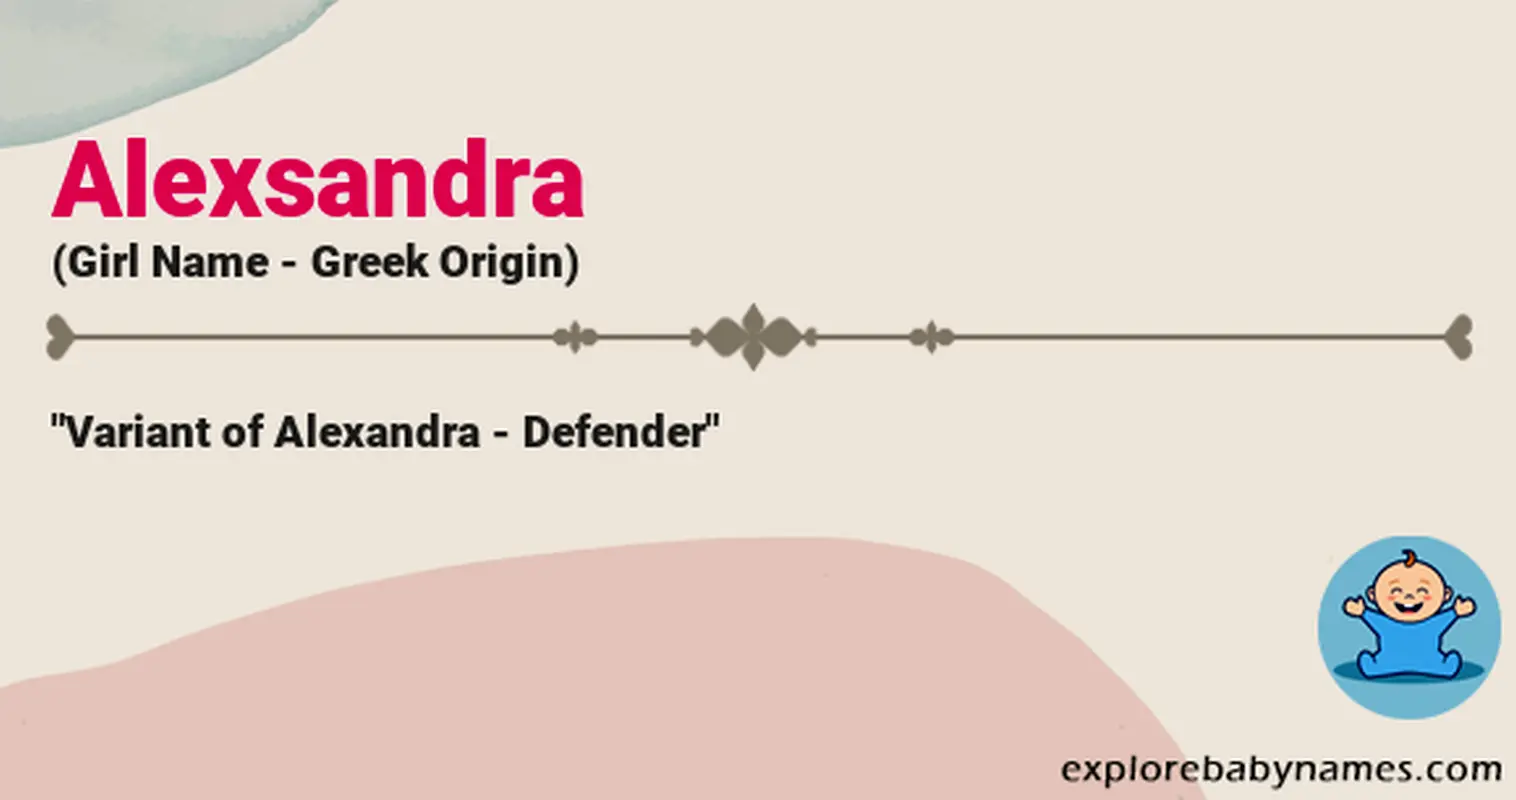 Meaning of Alexsandra